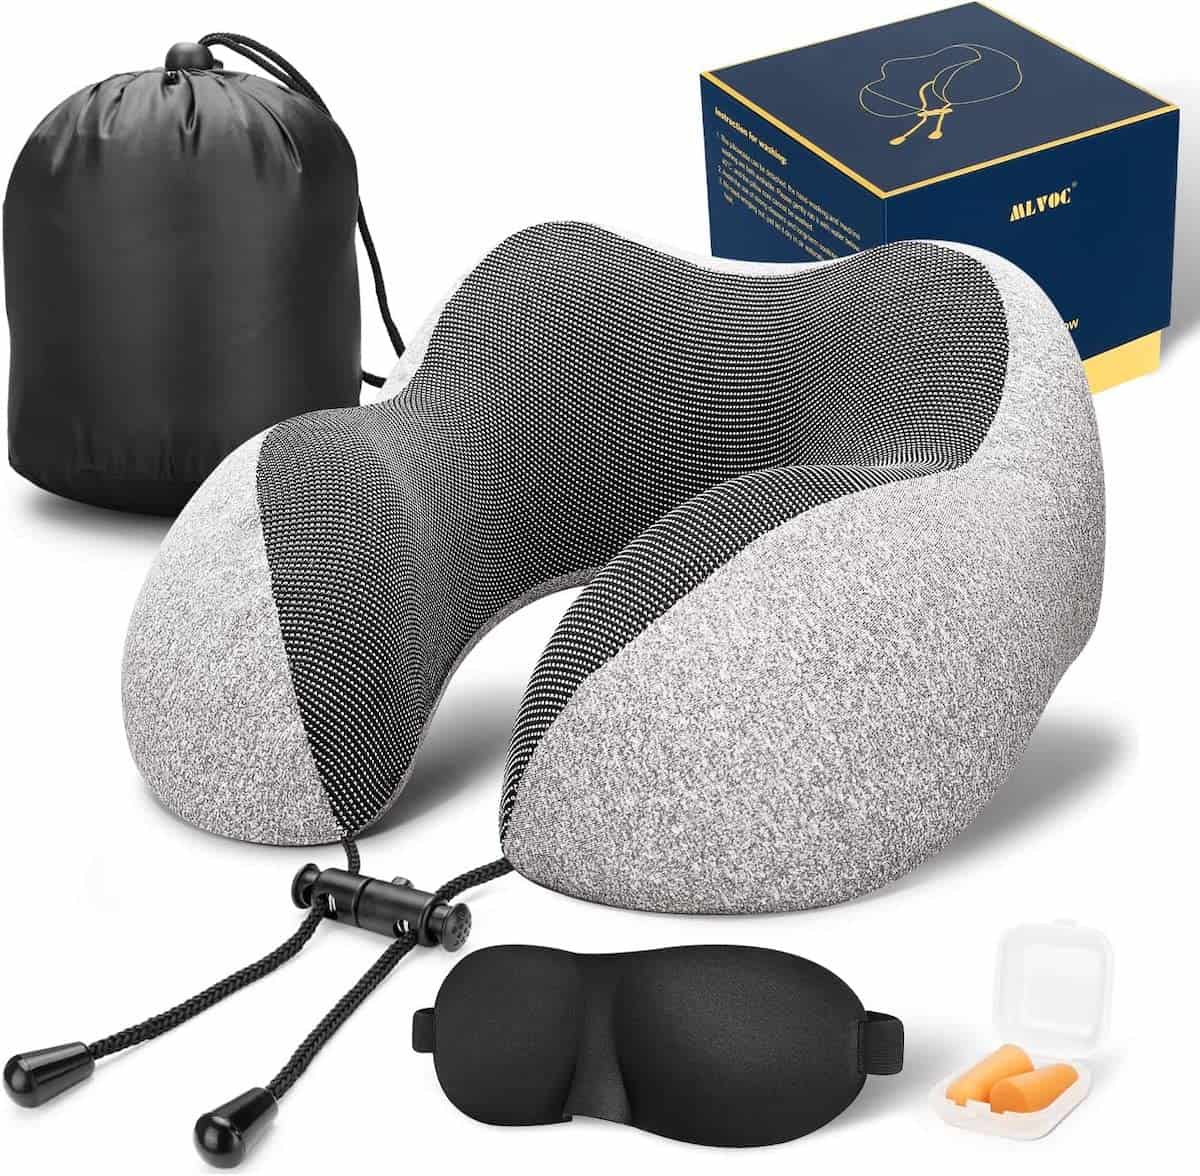 Travel accessories for men: Memory Foam Travel Pillow